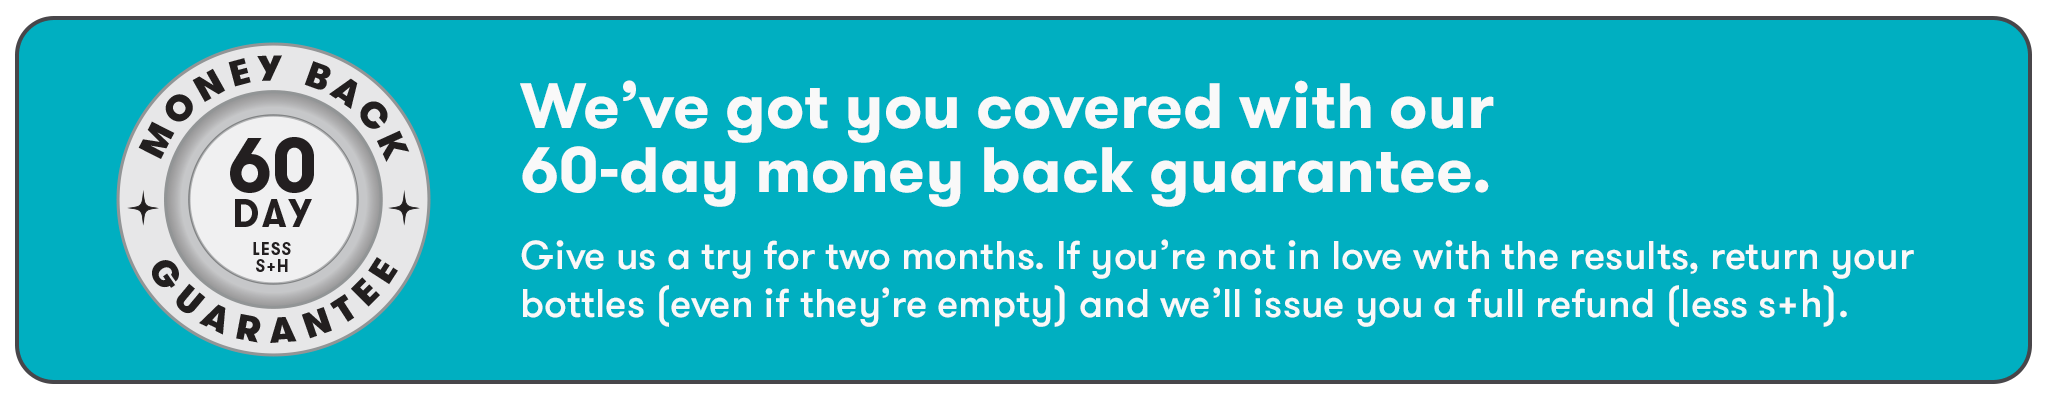 60-day money back guarantee banner